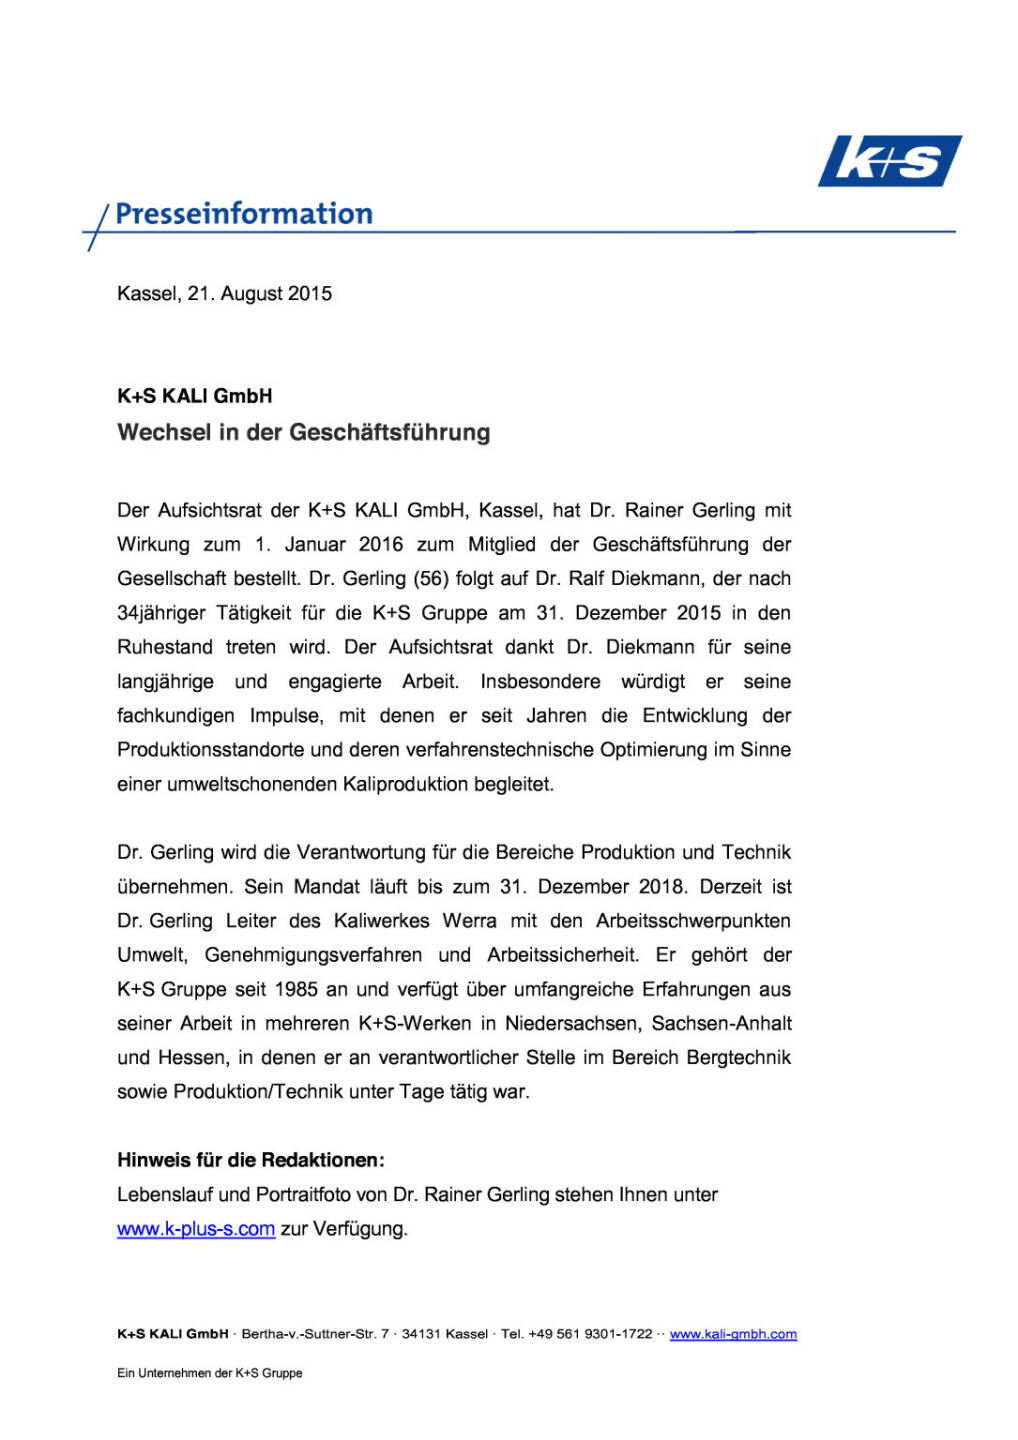 K+S Kali GmbH: Wechsel in der Geschäftsführung, Seite 1/2, komplettes Dokument unter http://boerse-social.com/static/uploads/file_304_ks_kali_gmbh_wechsel_in_der_geschäftsführung.pdf